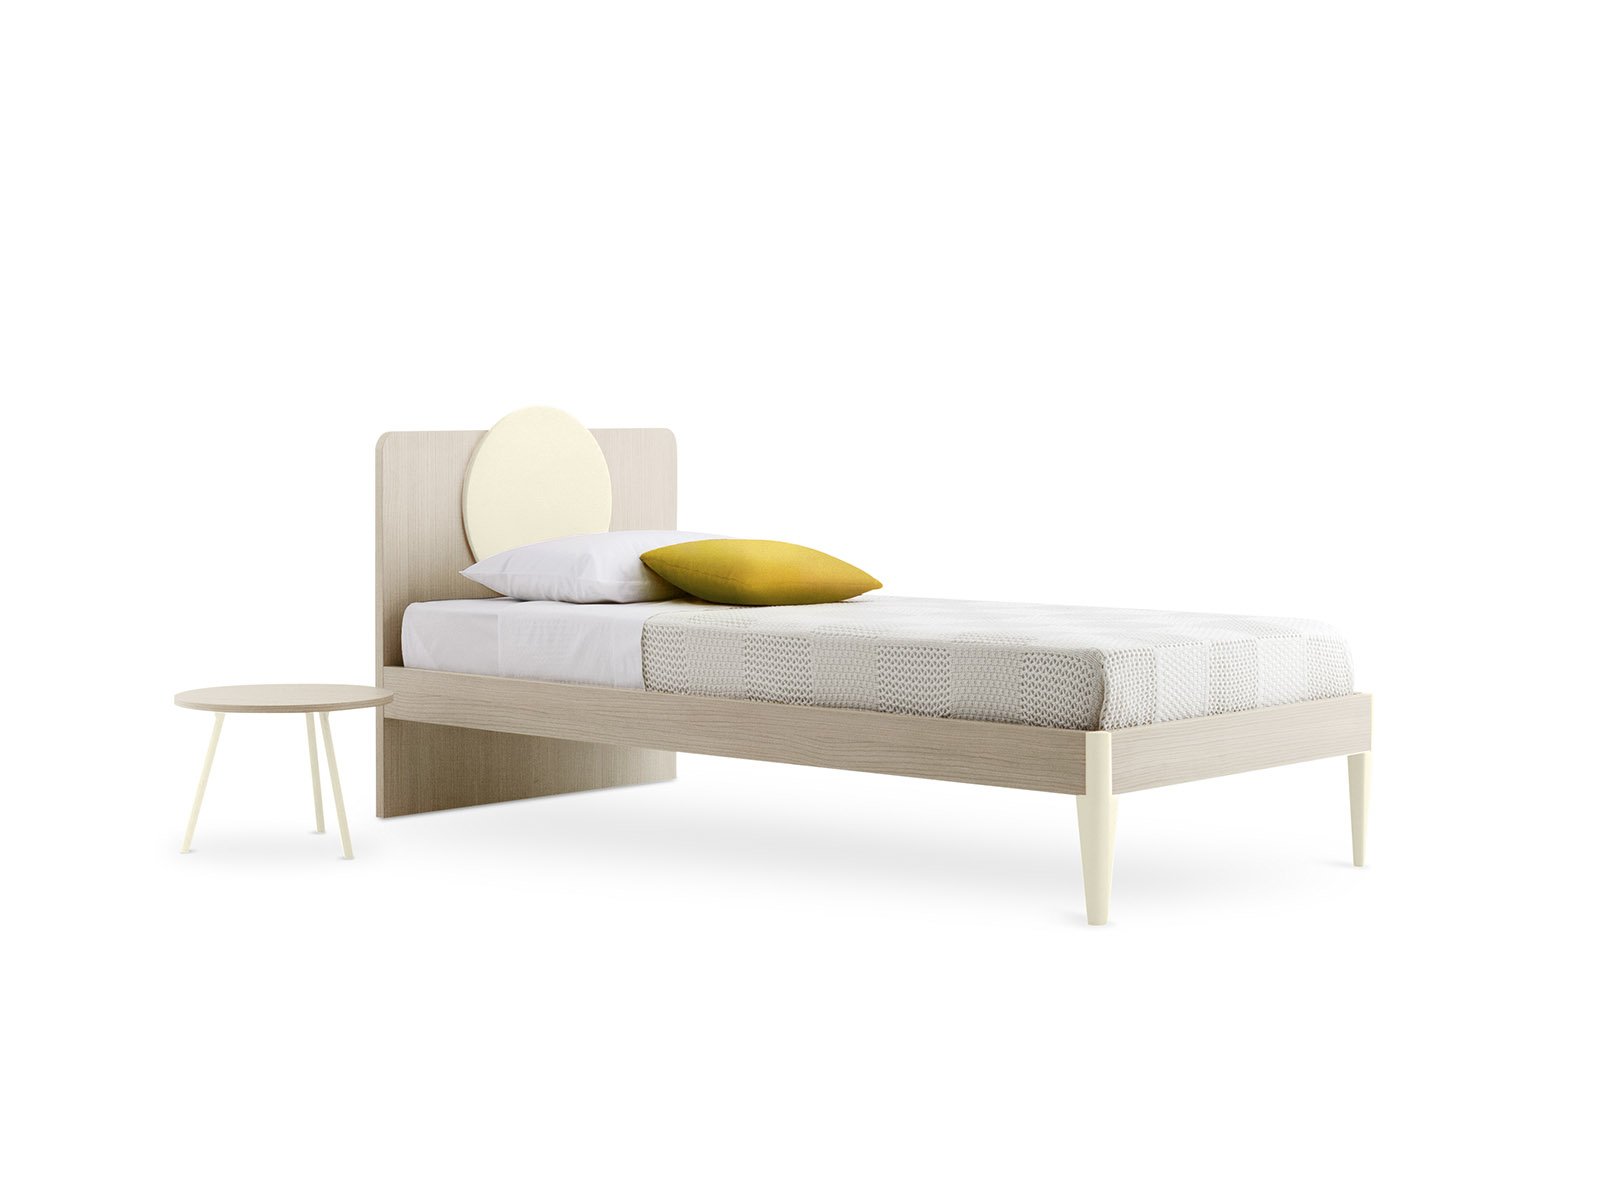 Giro single bed